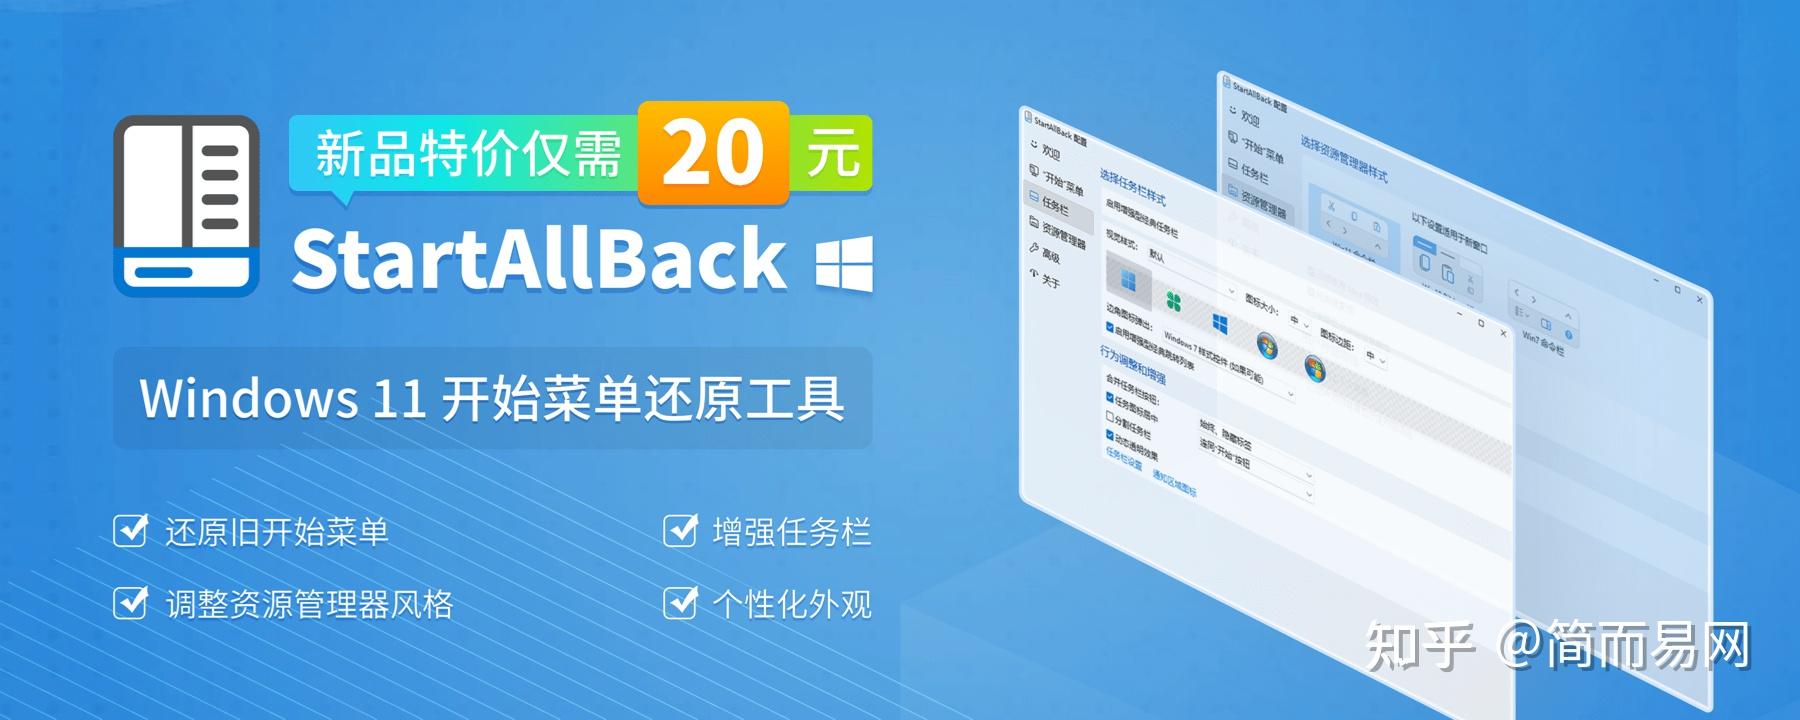 download the new StartAllBack 3.6.9